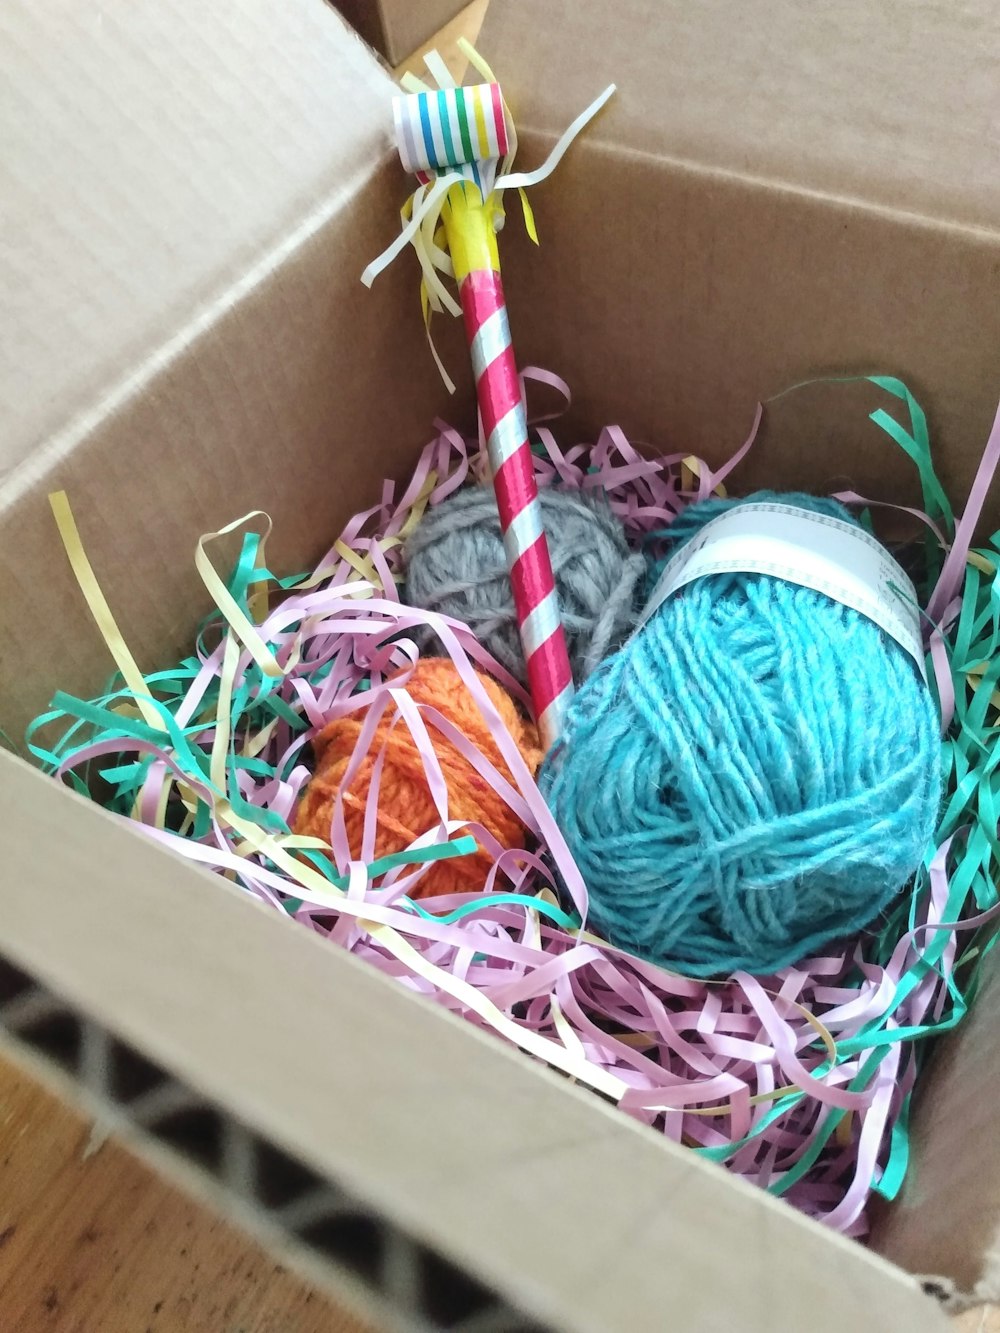 a box of colorful yarn